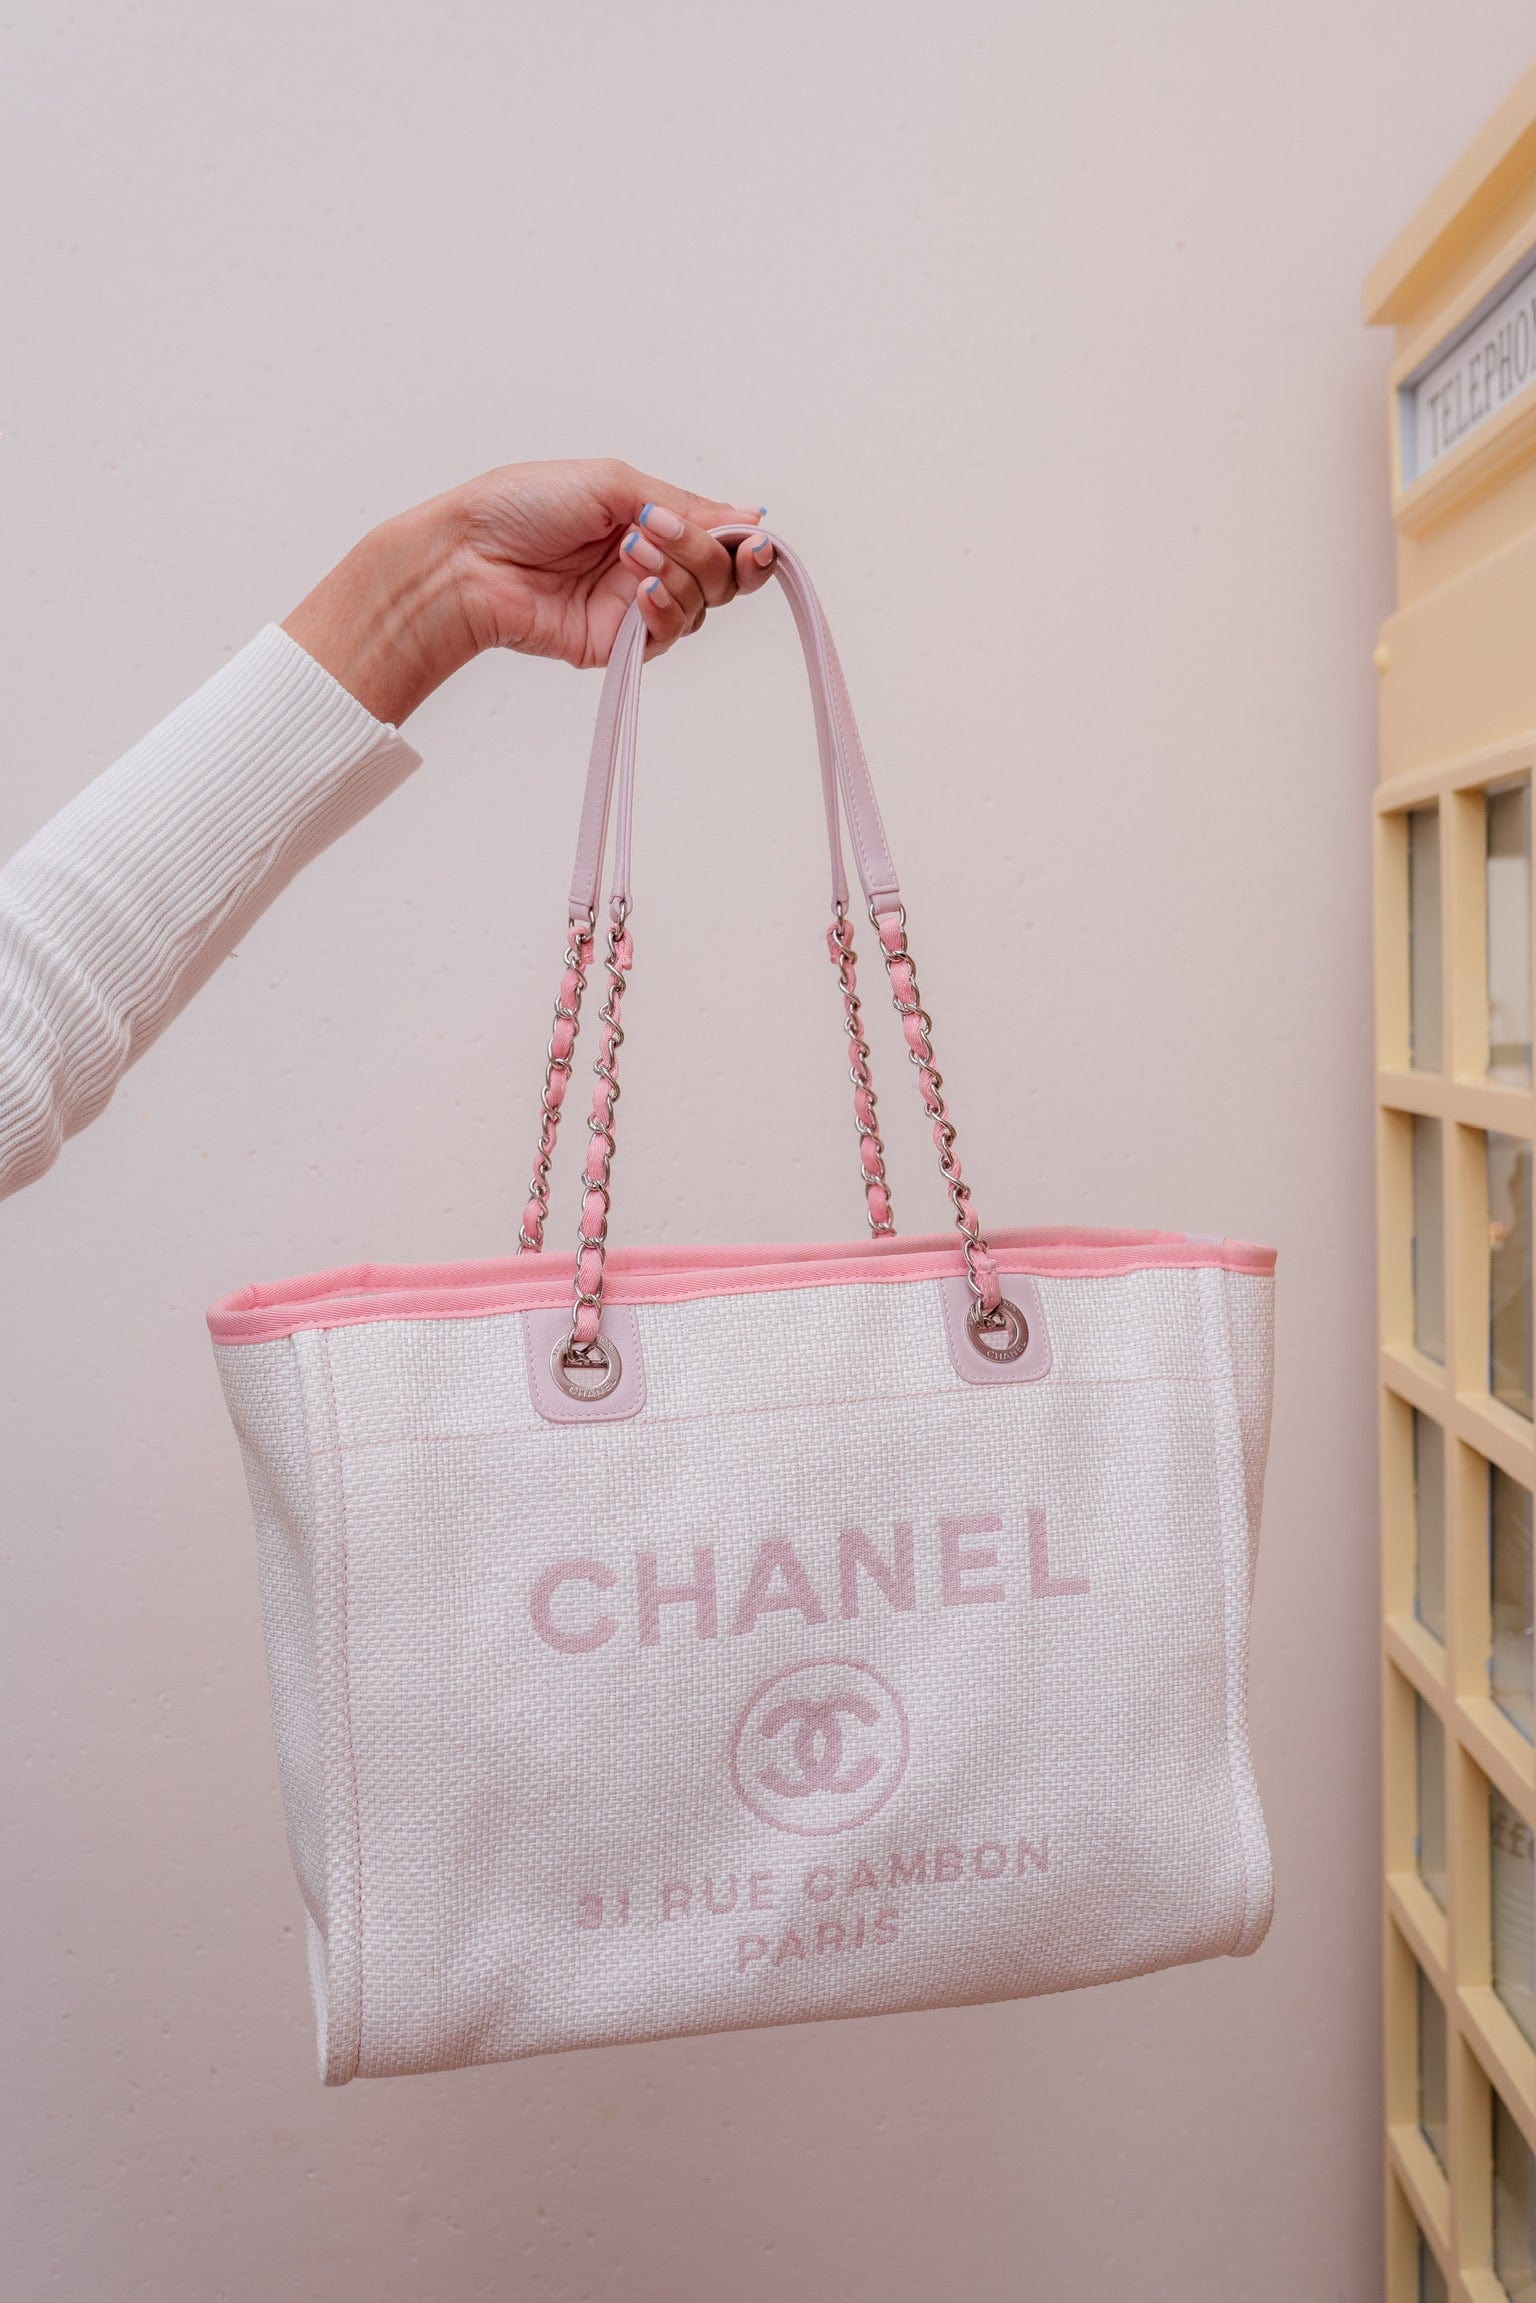 Chanel Chanel Small Deauville Pink Handbag RJL1341